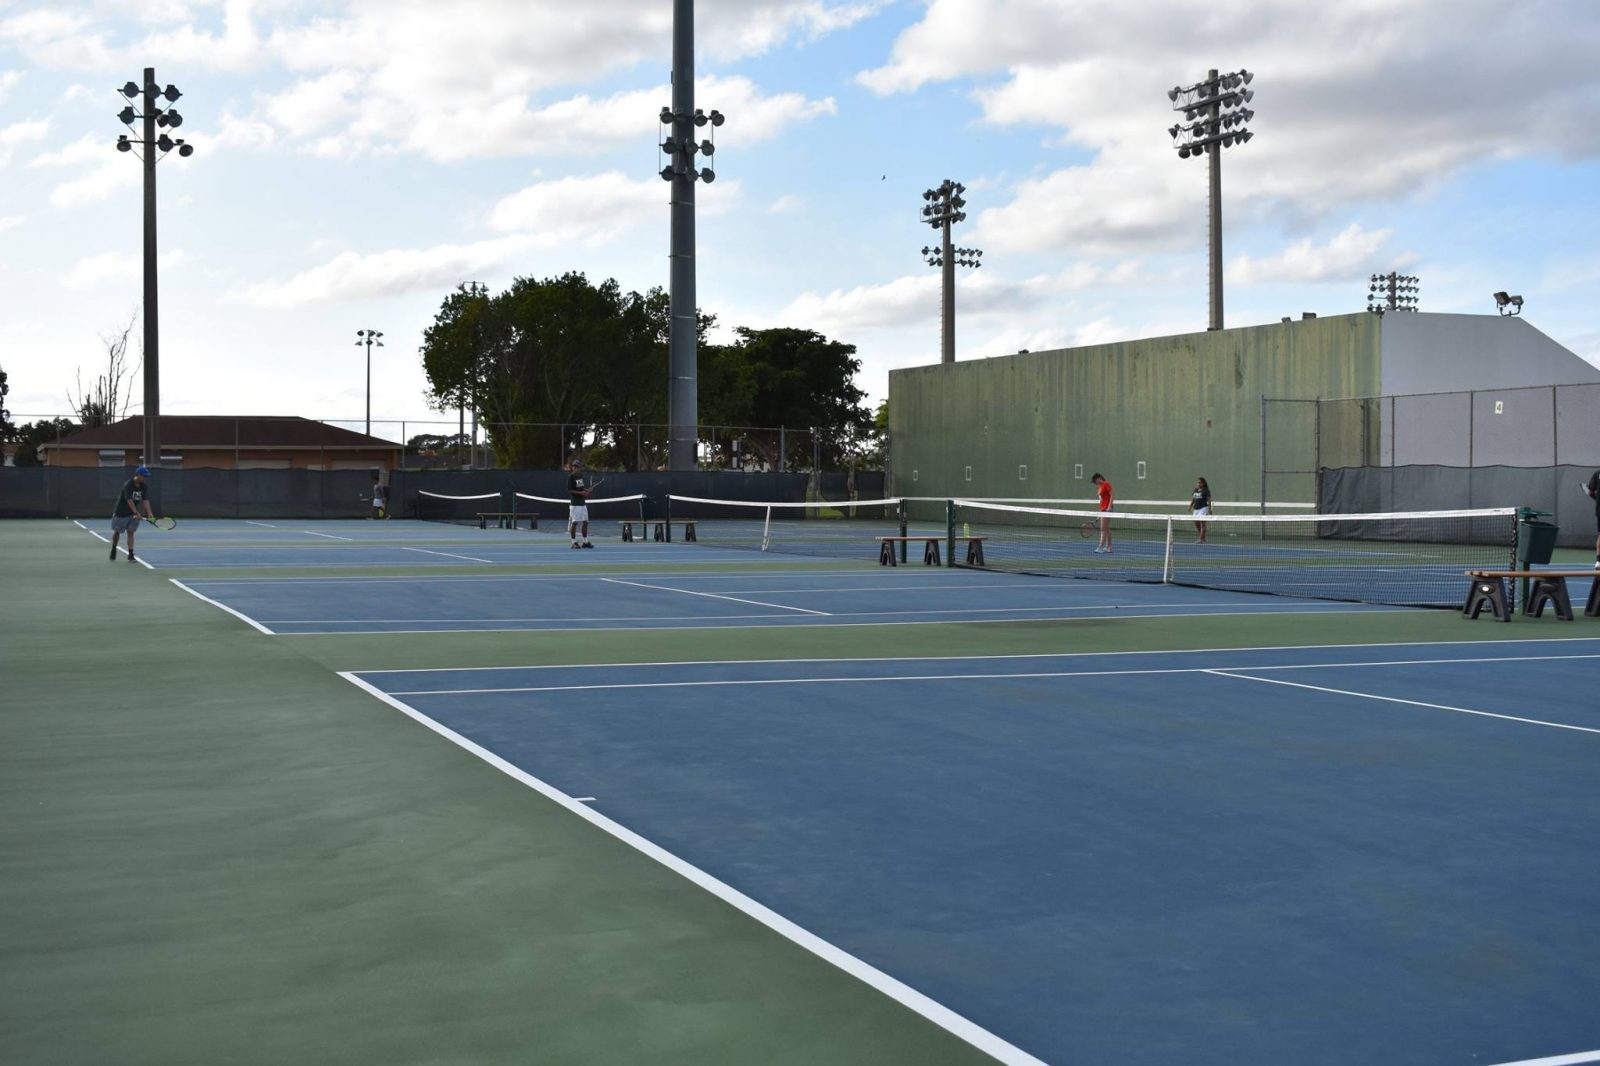 Tennis Courts 